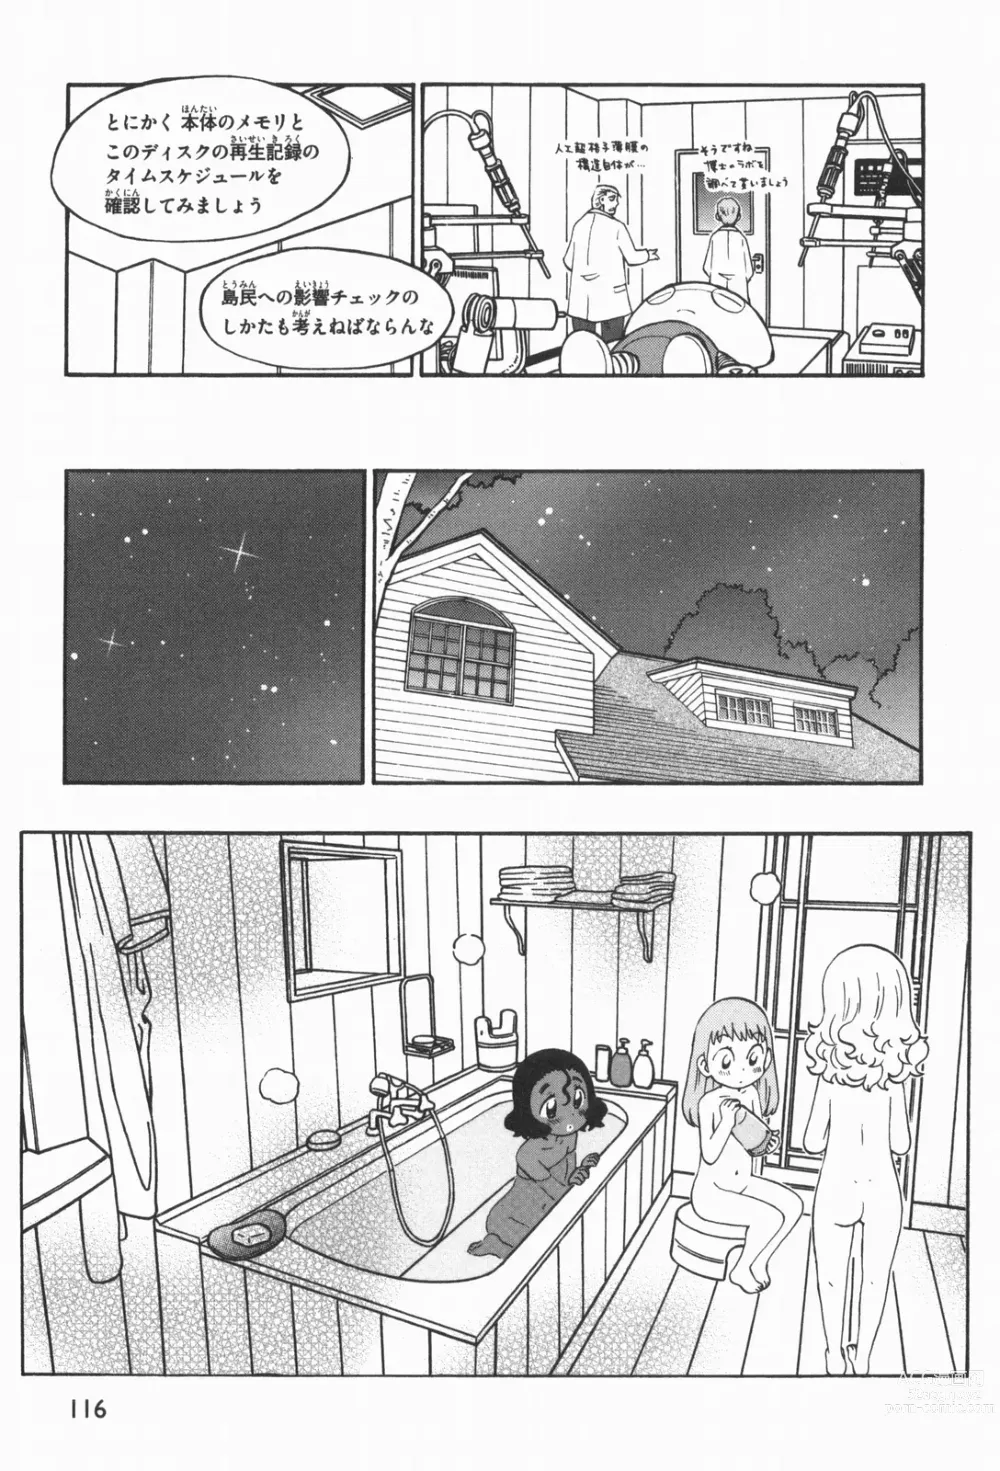 Page 9 of doujinshi Terao the Next Generation Machine